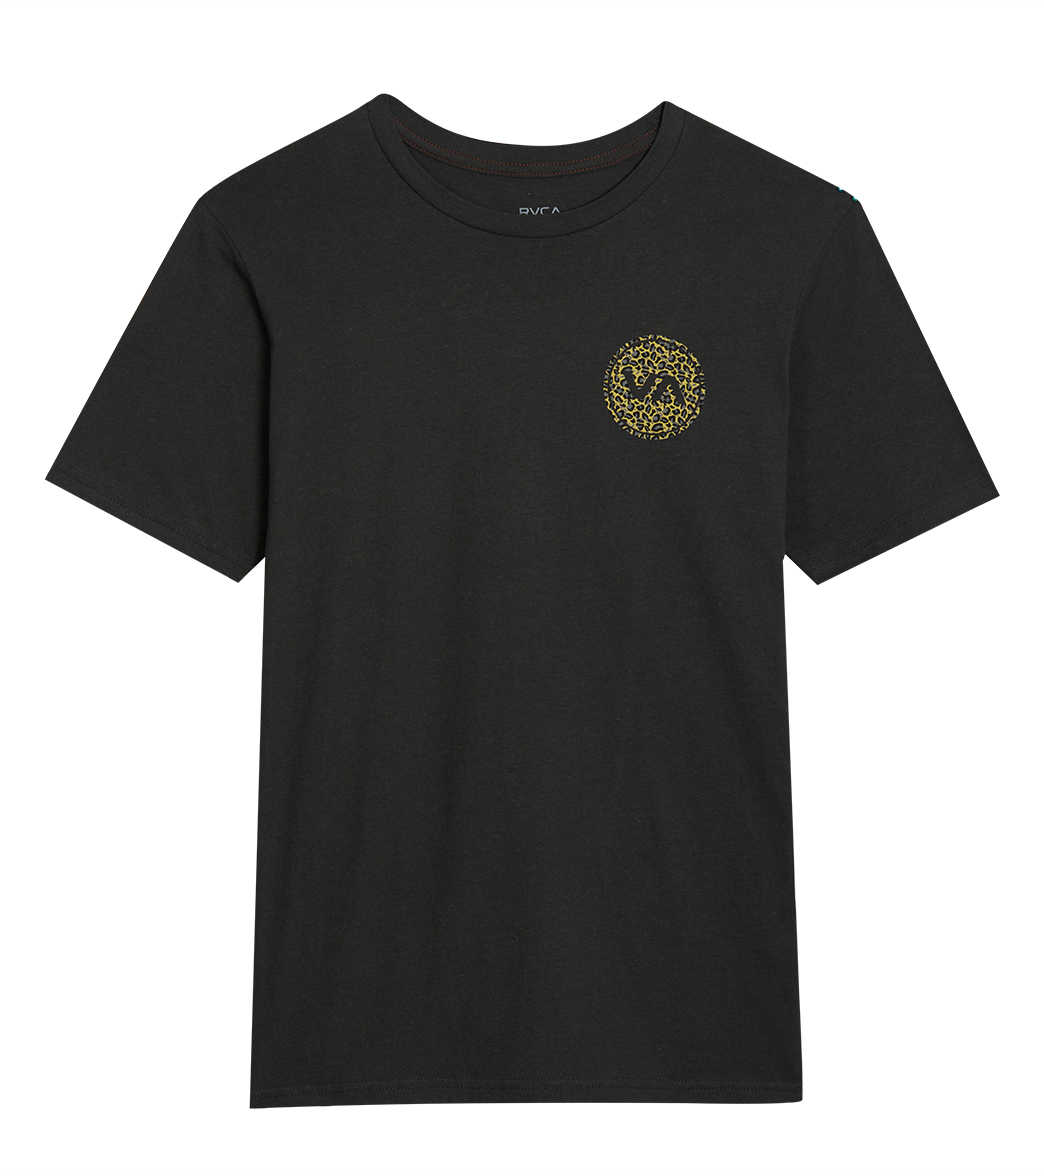 Rvca Men's Va Mod Short Sleeve Tee Shirt - Pirate Black Large Cotton - Swimoutlet.com